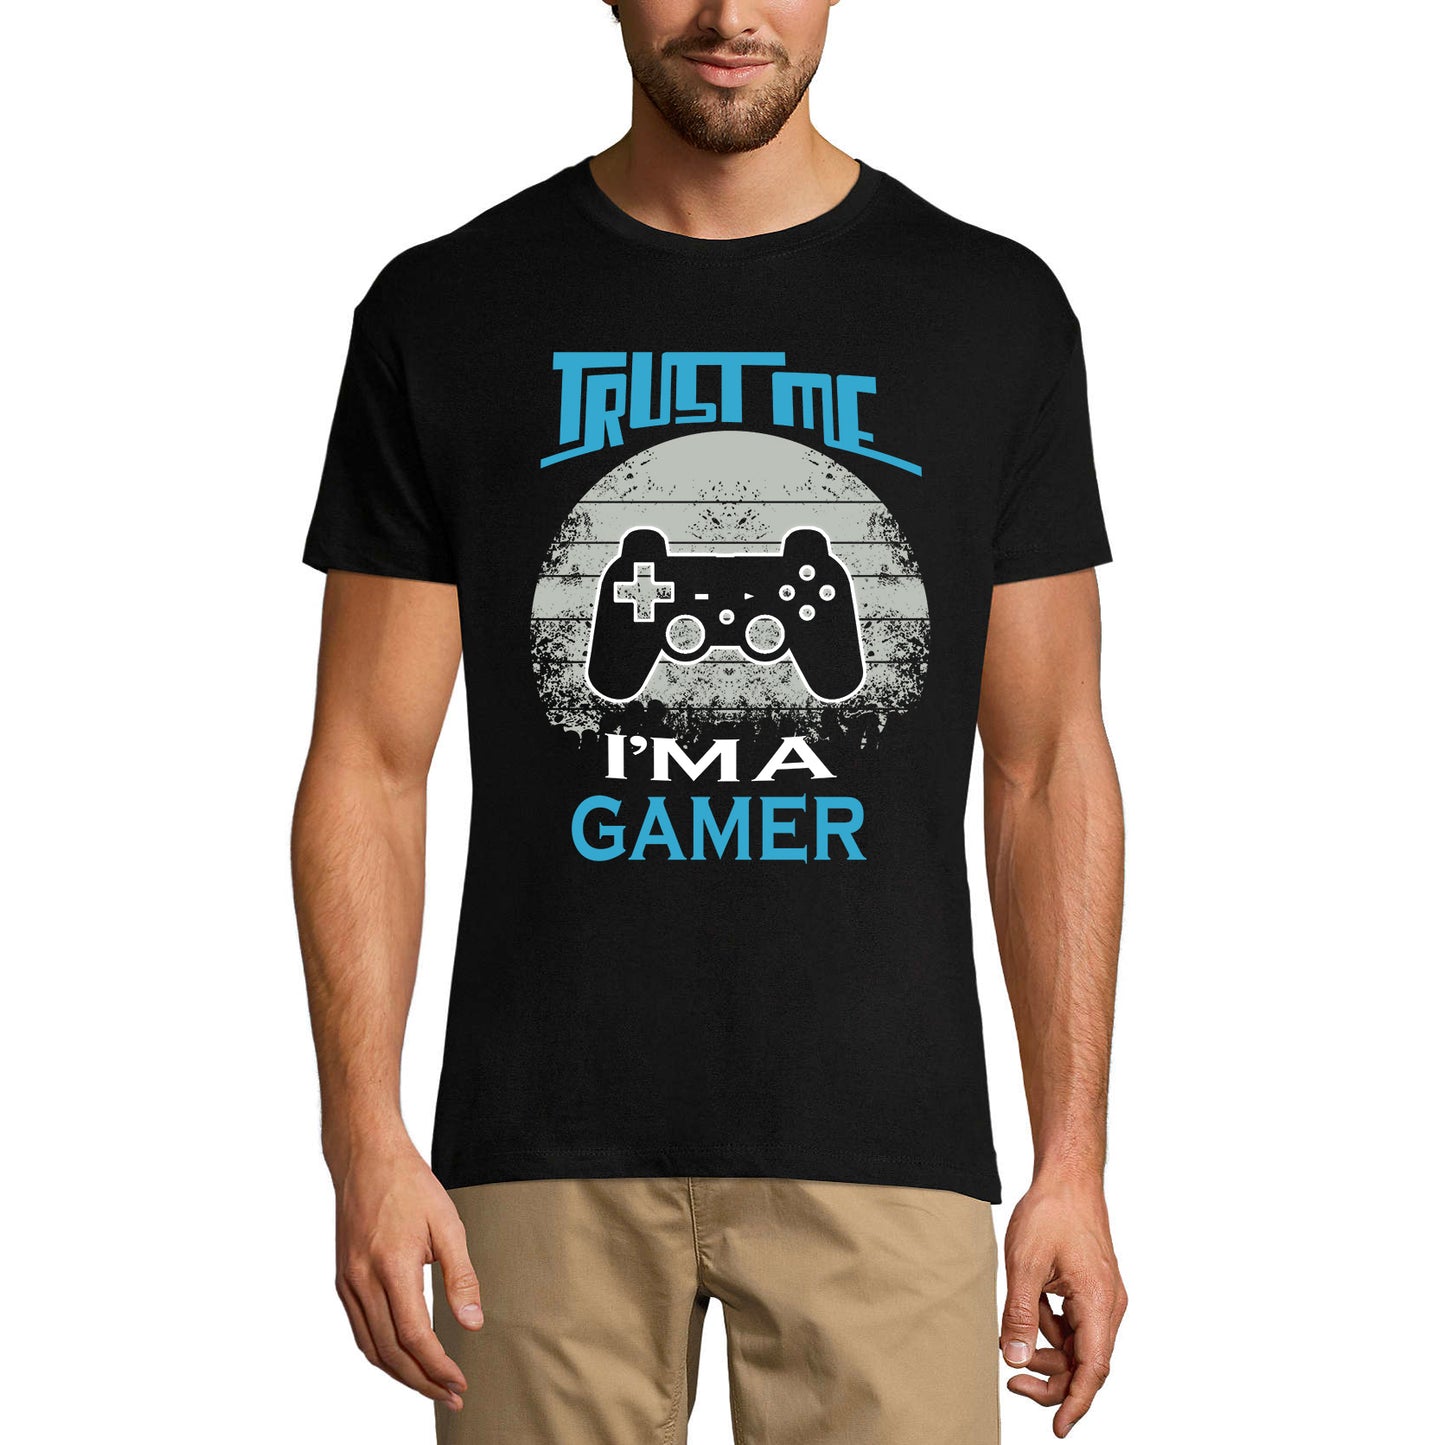 ULTRABASIC Men's Gaming T-Shirt - Trust Me I am a Gamer - Vintage Game Shirt